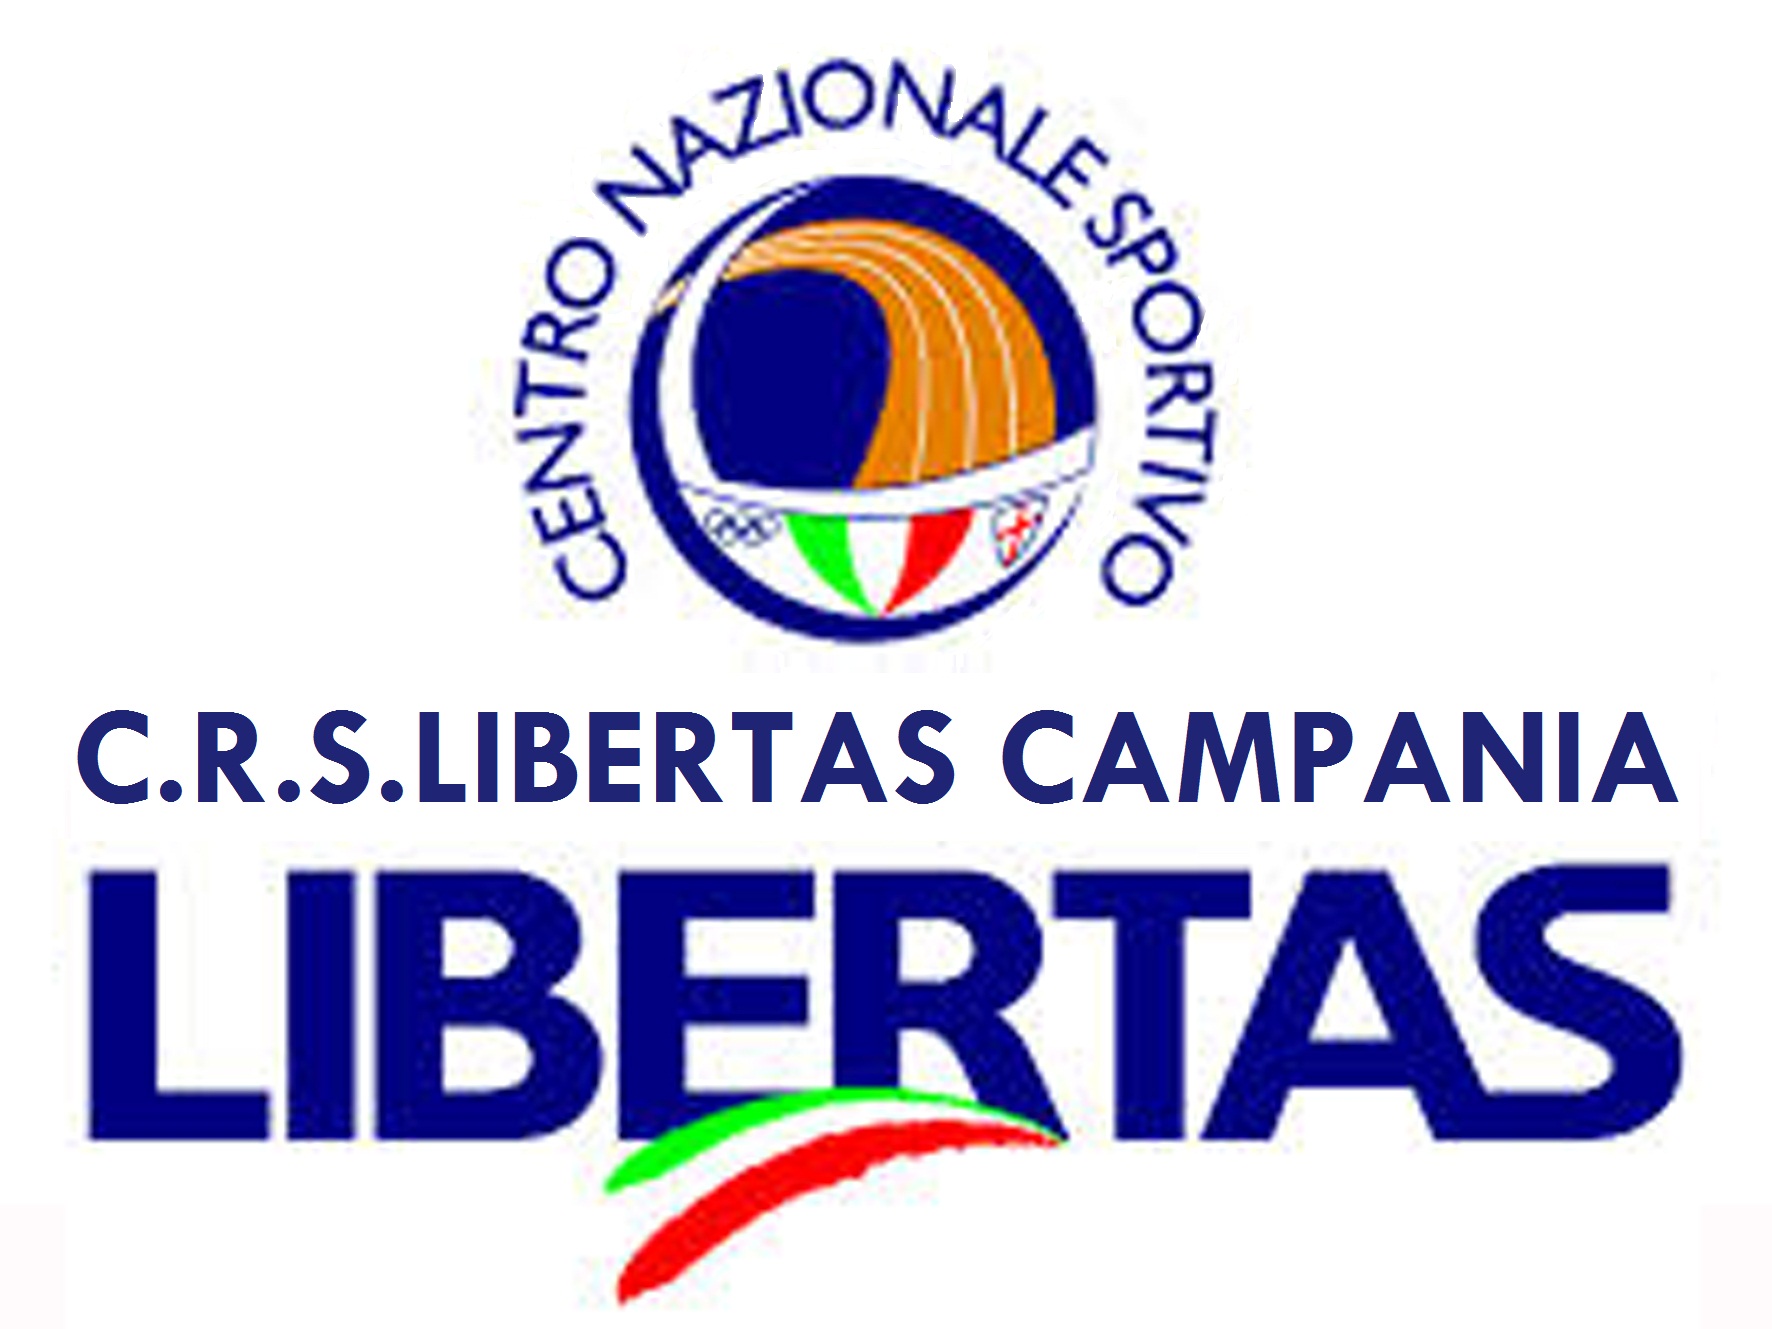 Centro Regionale Sportivo Libertas Campania